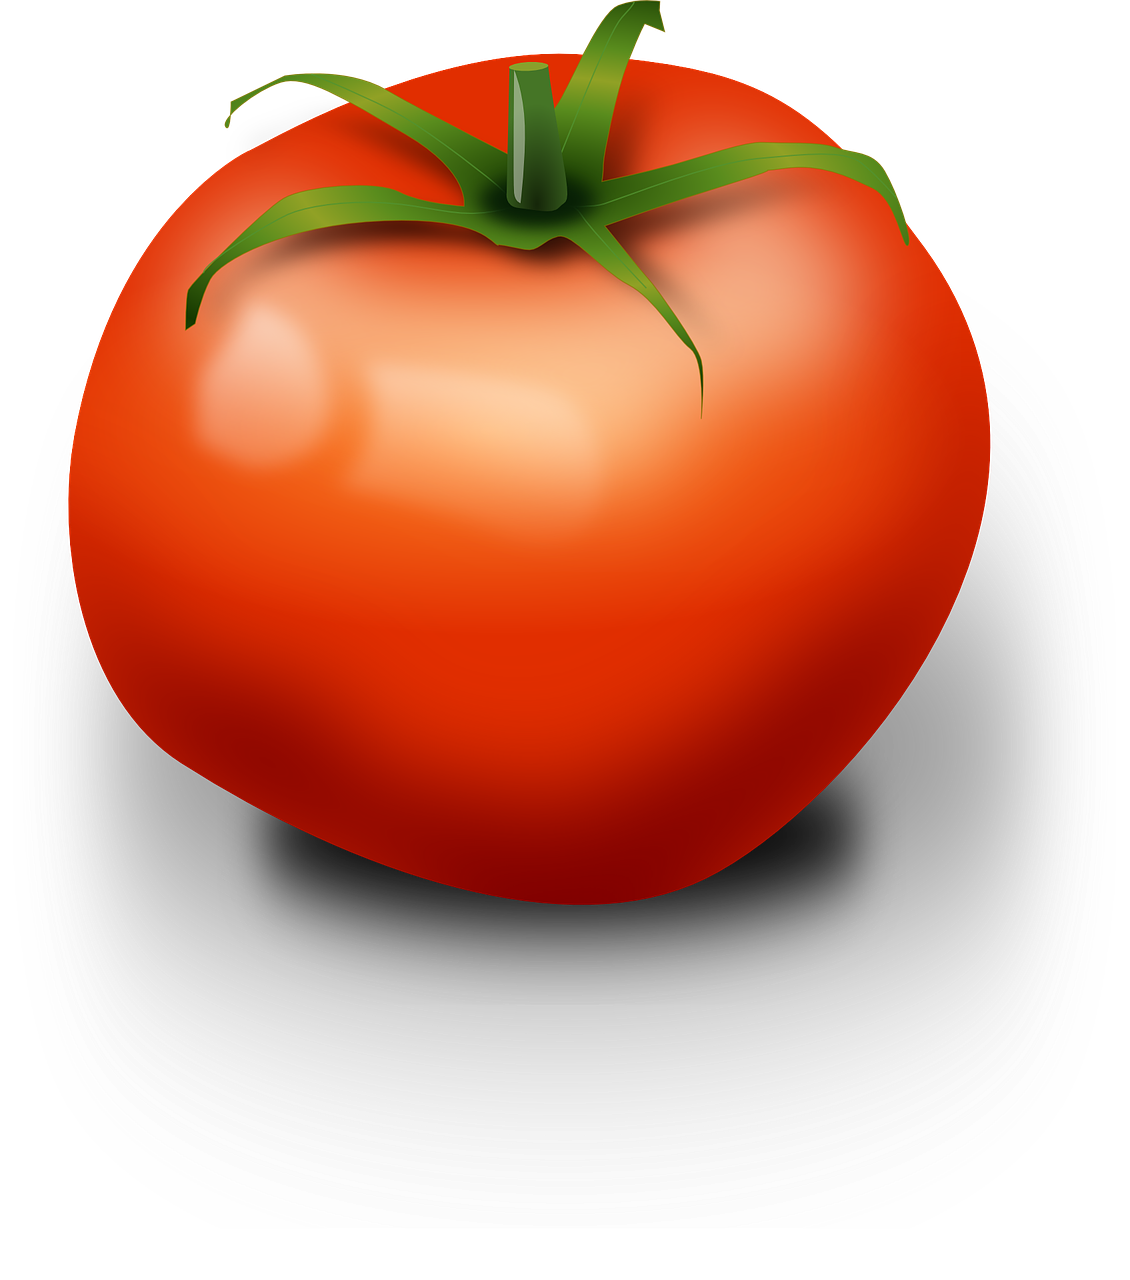 die tomatos